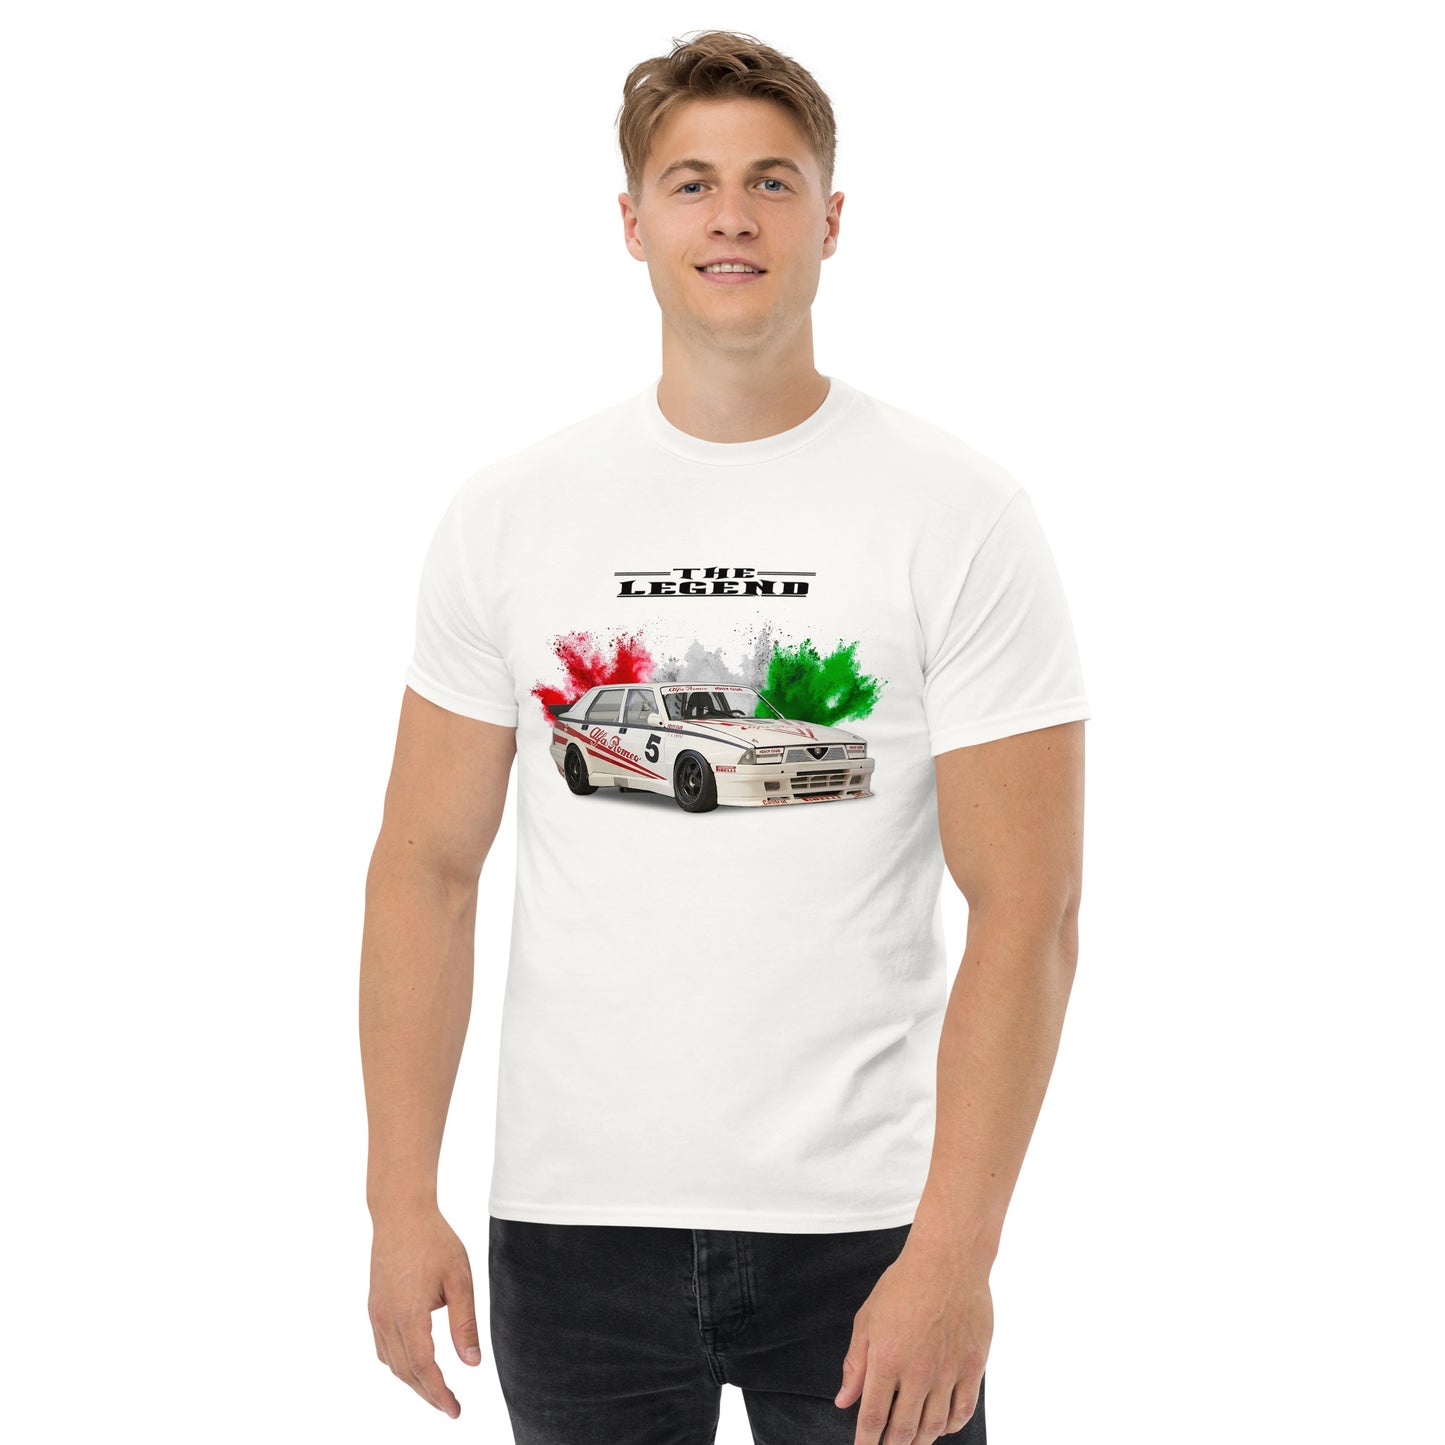 T-shirt Alfa Romeo 75